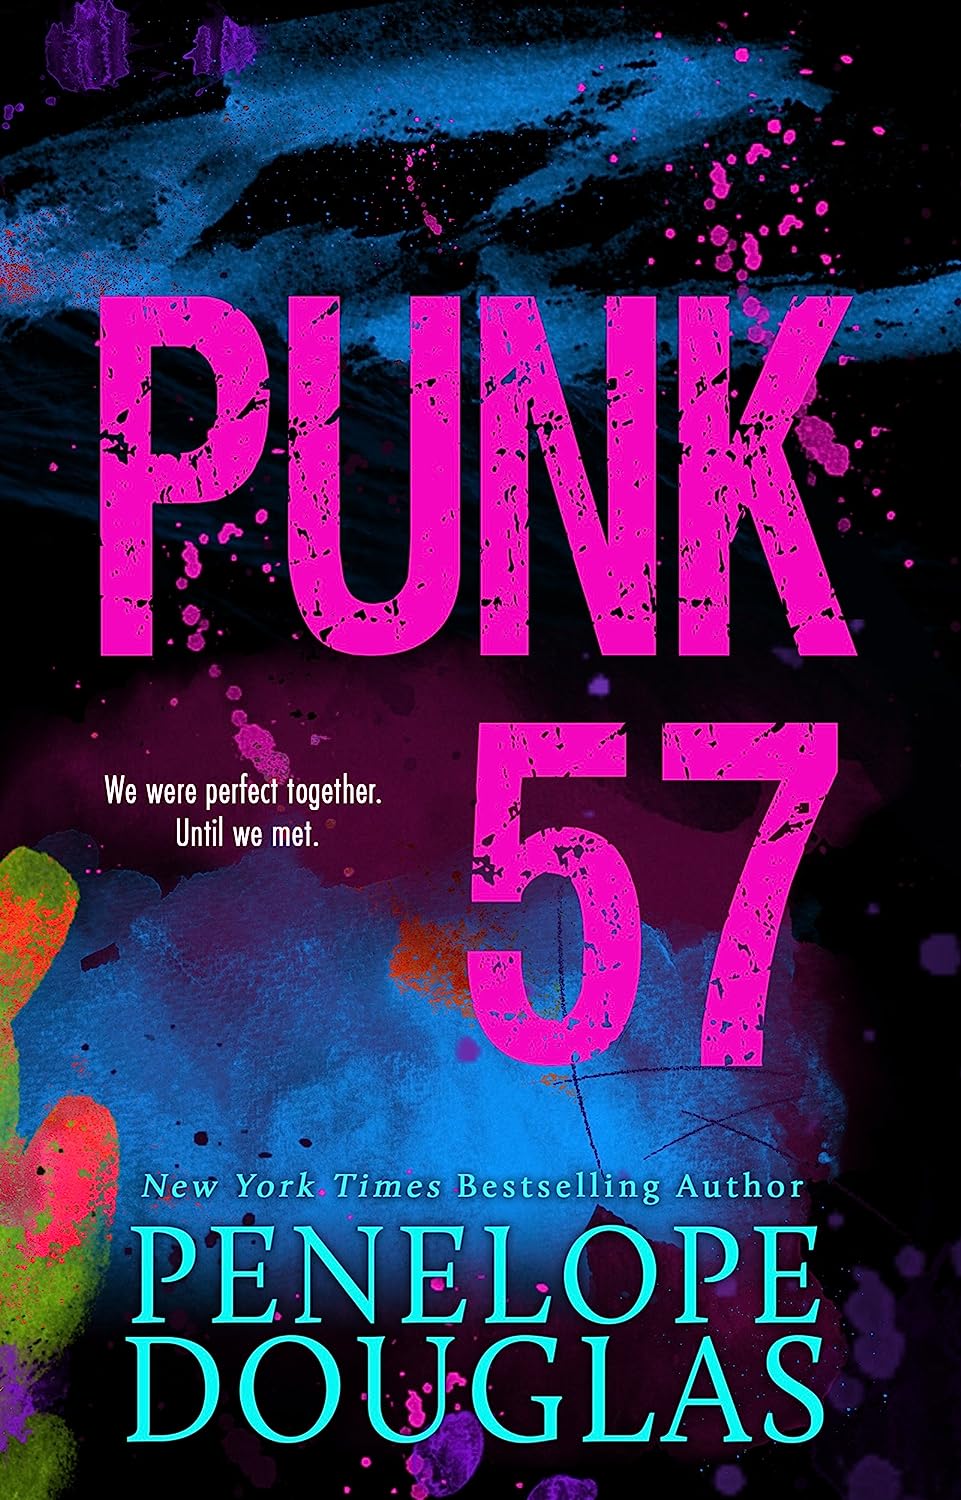 Punk 57 - Penelope Douglas